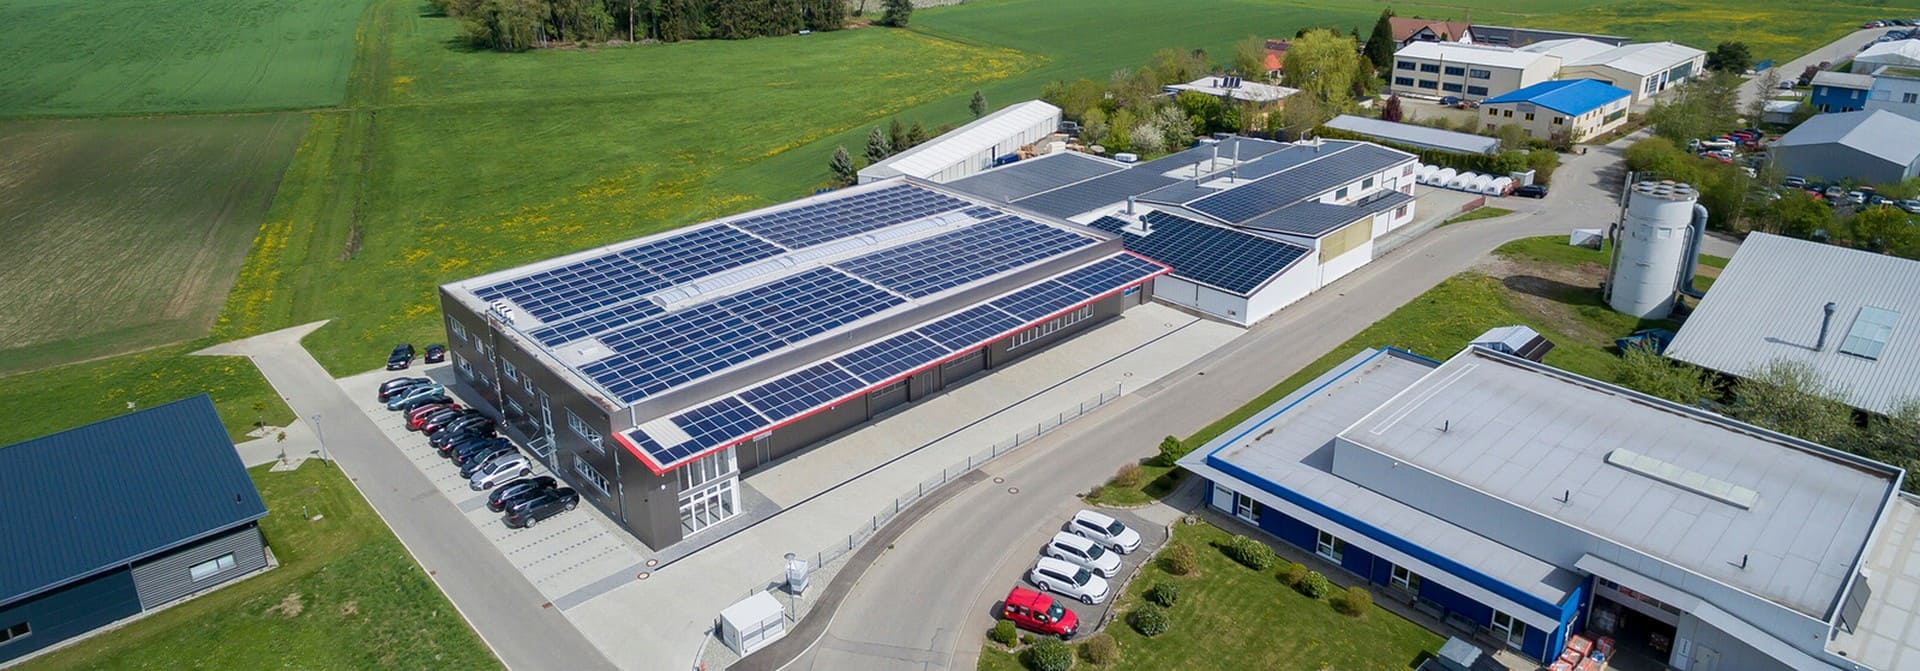 ENPLA-GmbH-Photovoltaik-Referenz-Frico-PRK-Illmensee